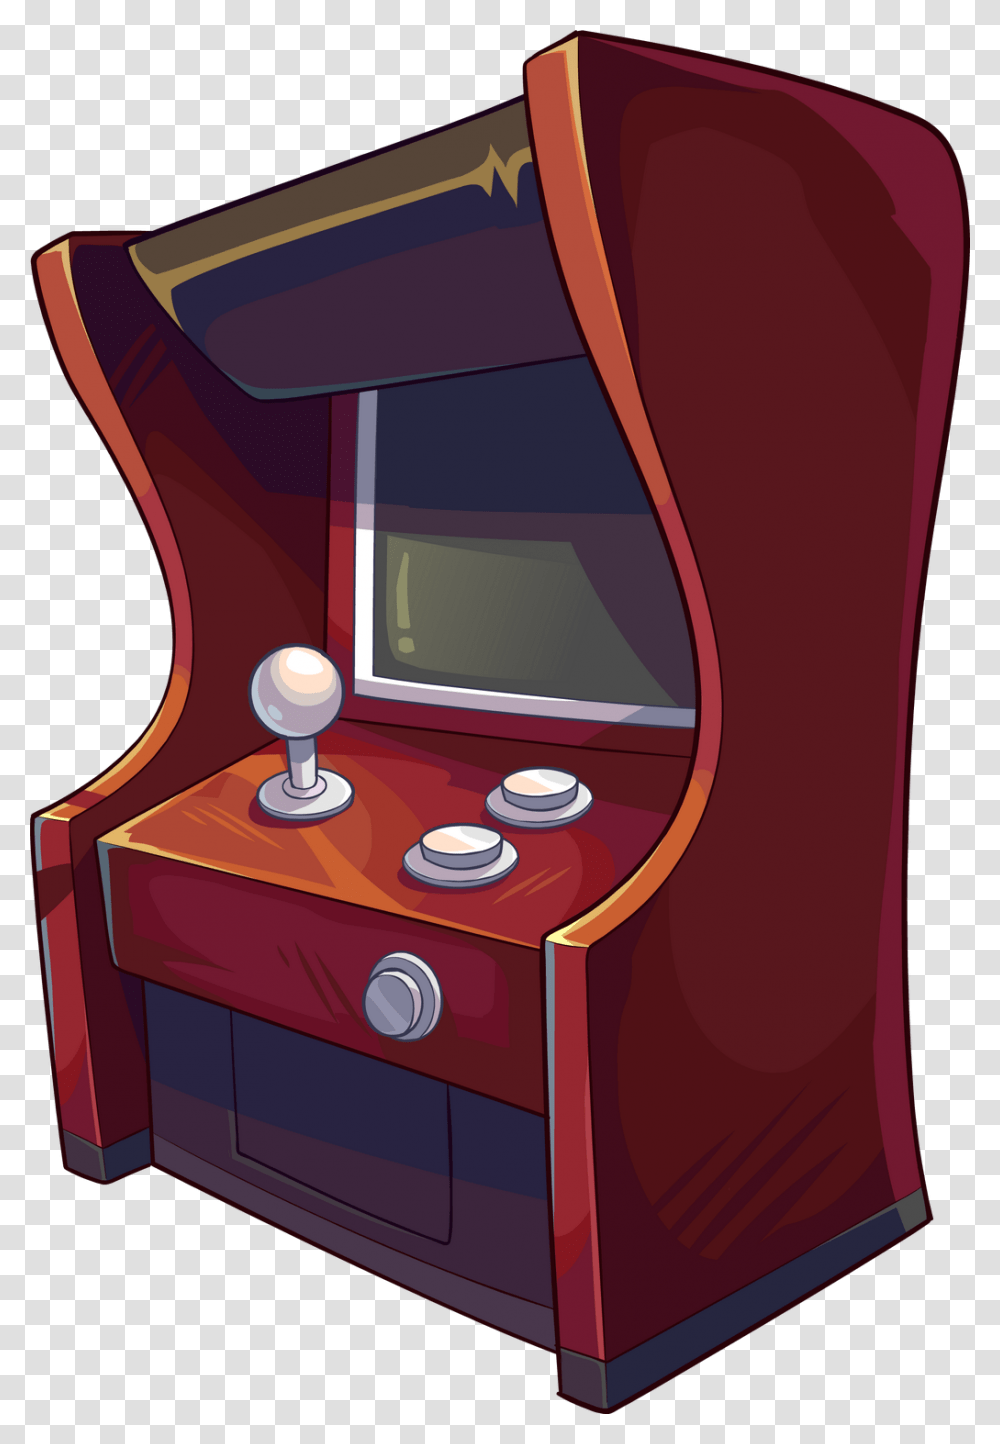 Video Game Clipart Club Penguin Arcade Machine, Arcade Game Machine, Video Gaming Transparent Png